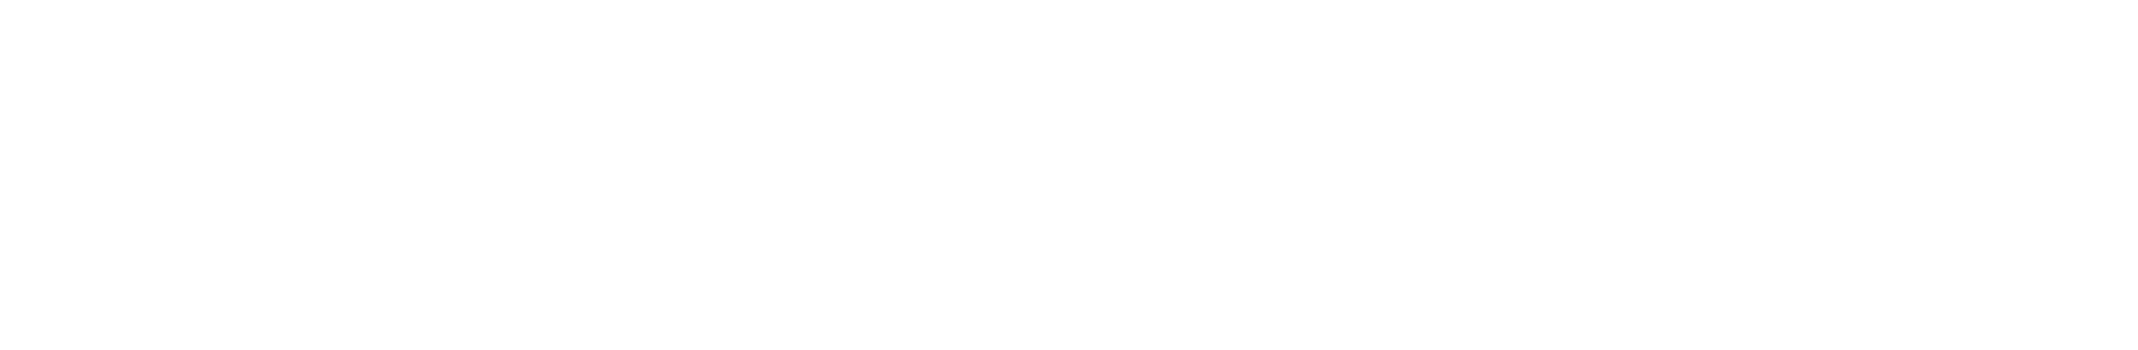 redeemer logo white (1) copy